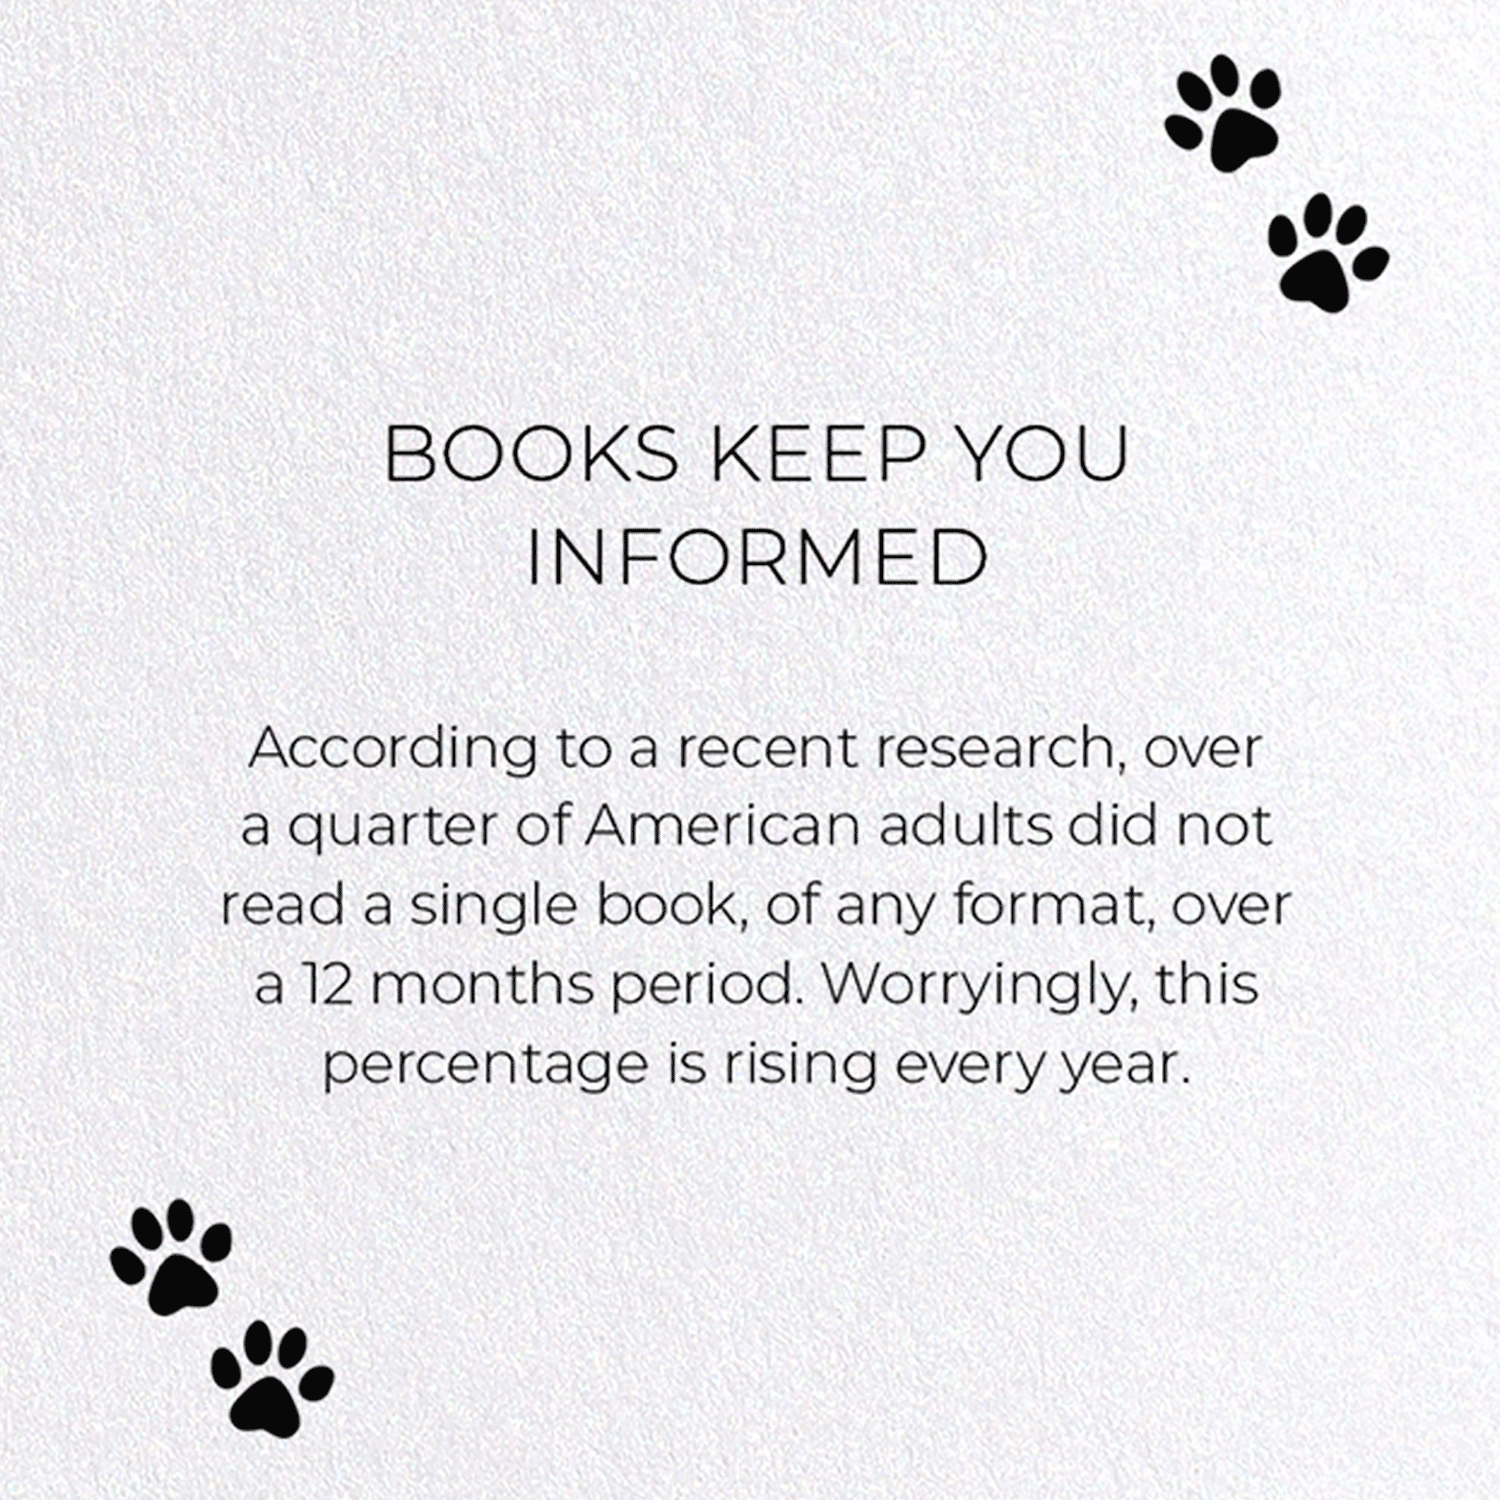 BOOKS KEEP YOU INFORMED